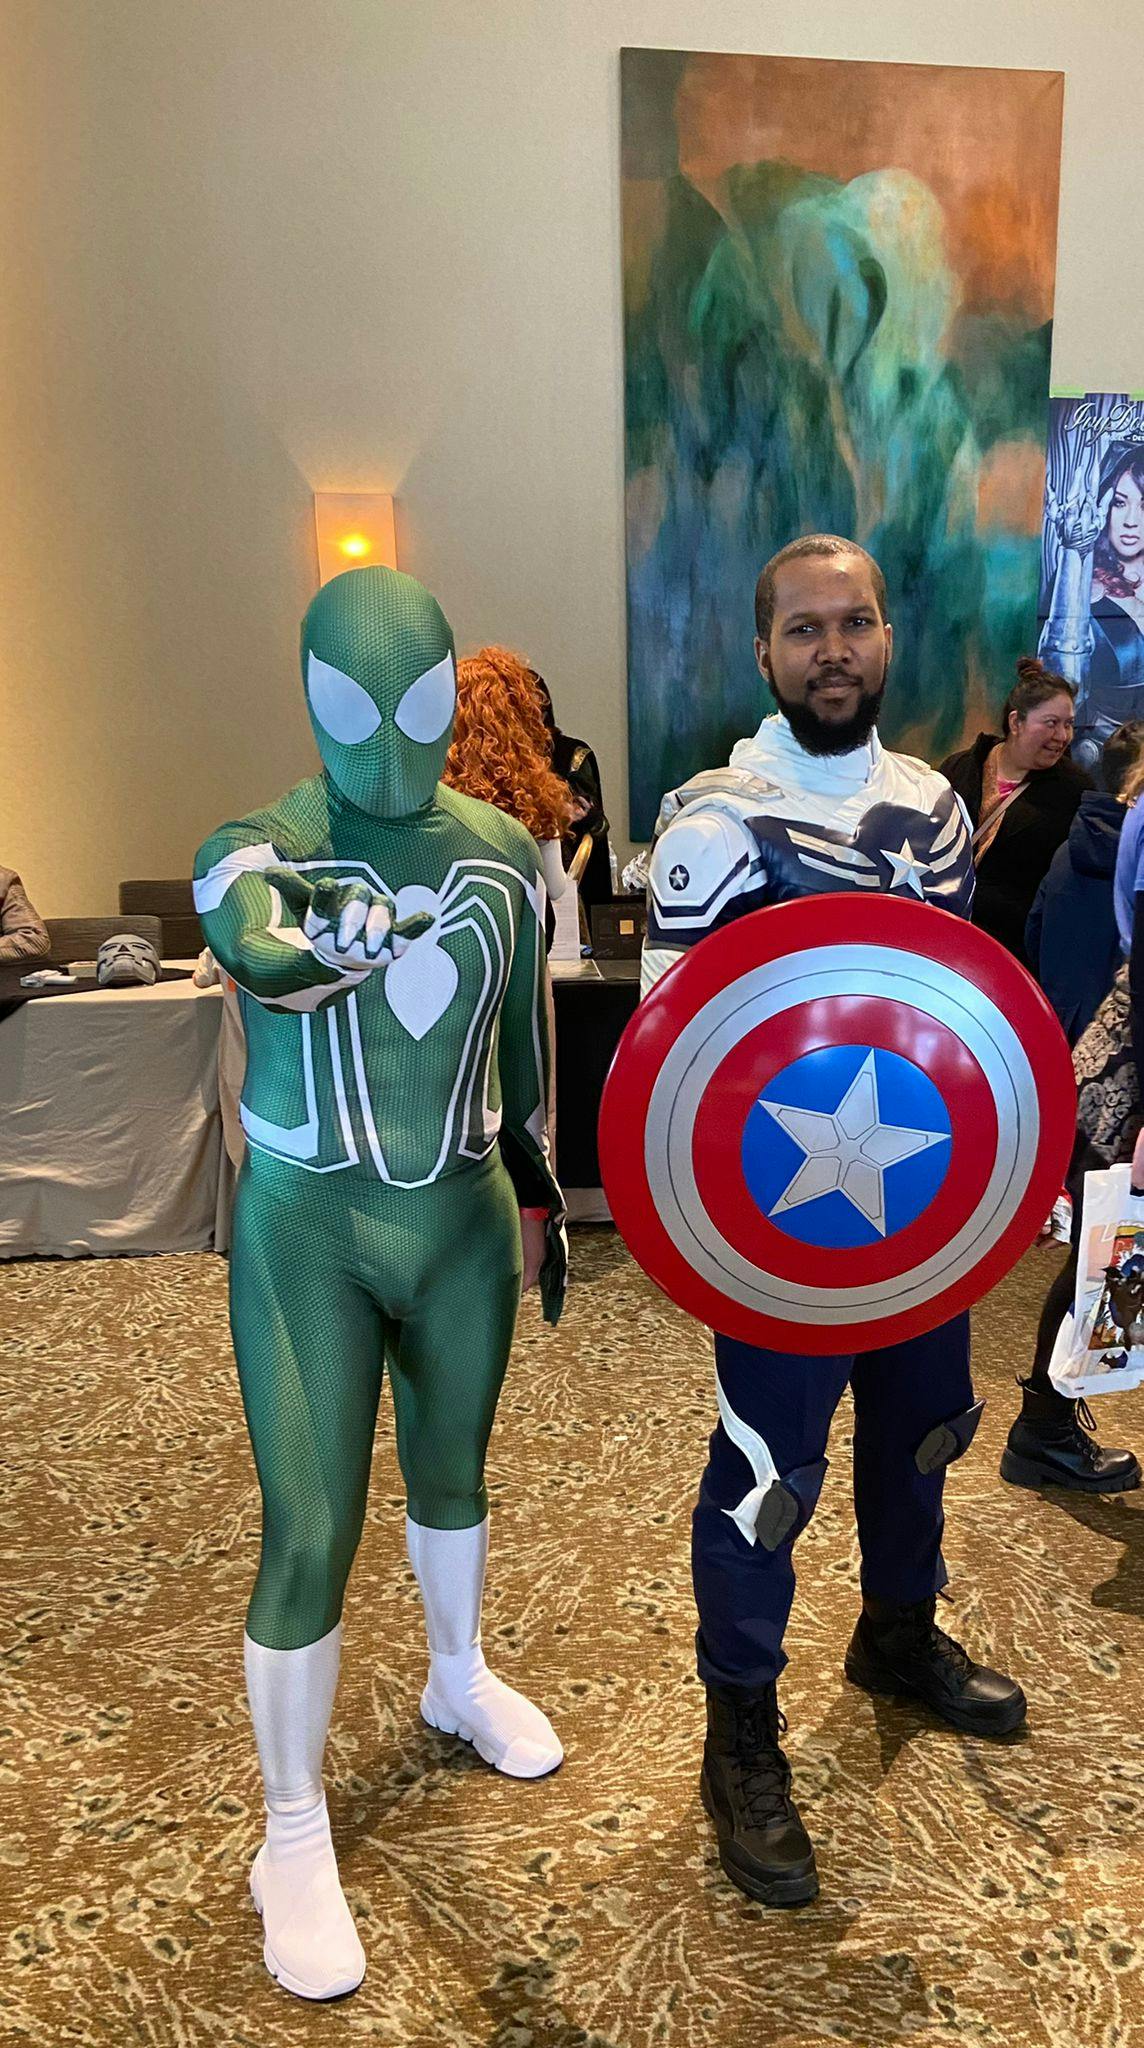 Captain America cosplay at Wicked Comic Con Boston